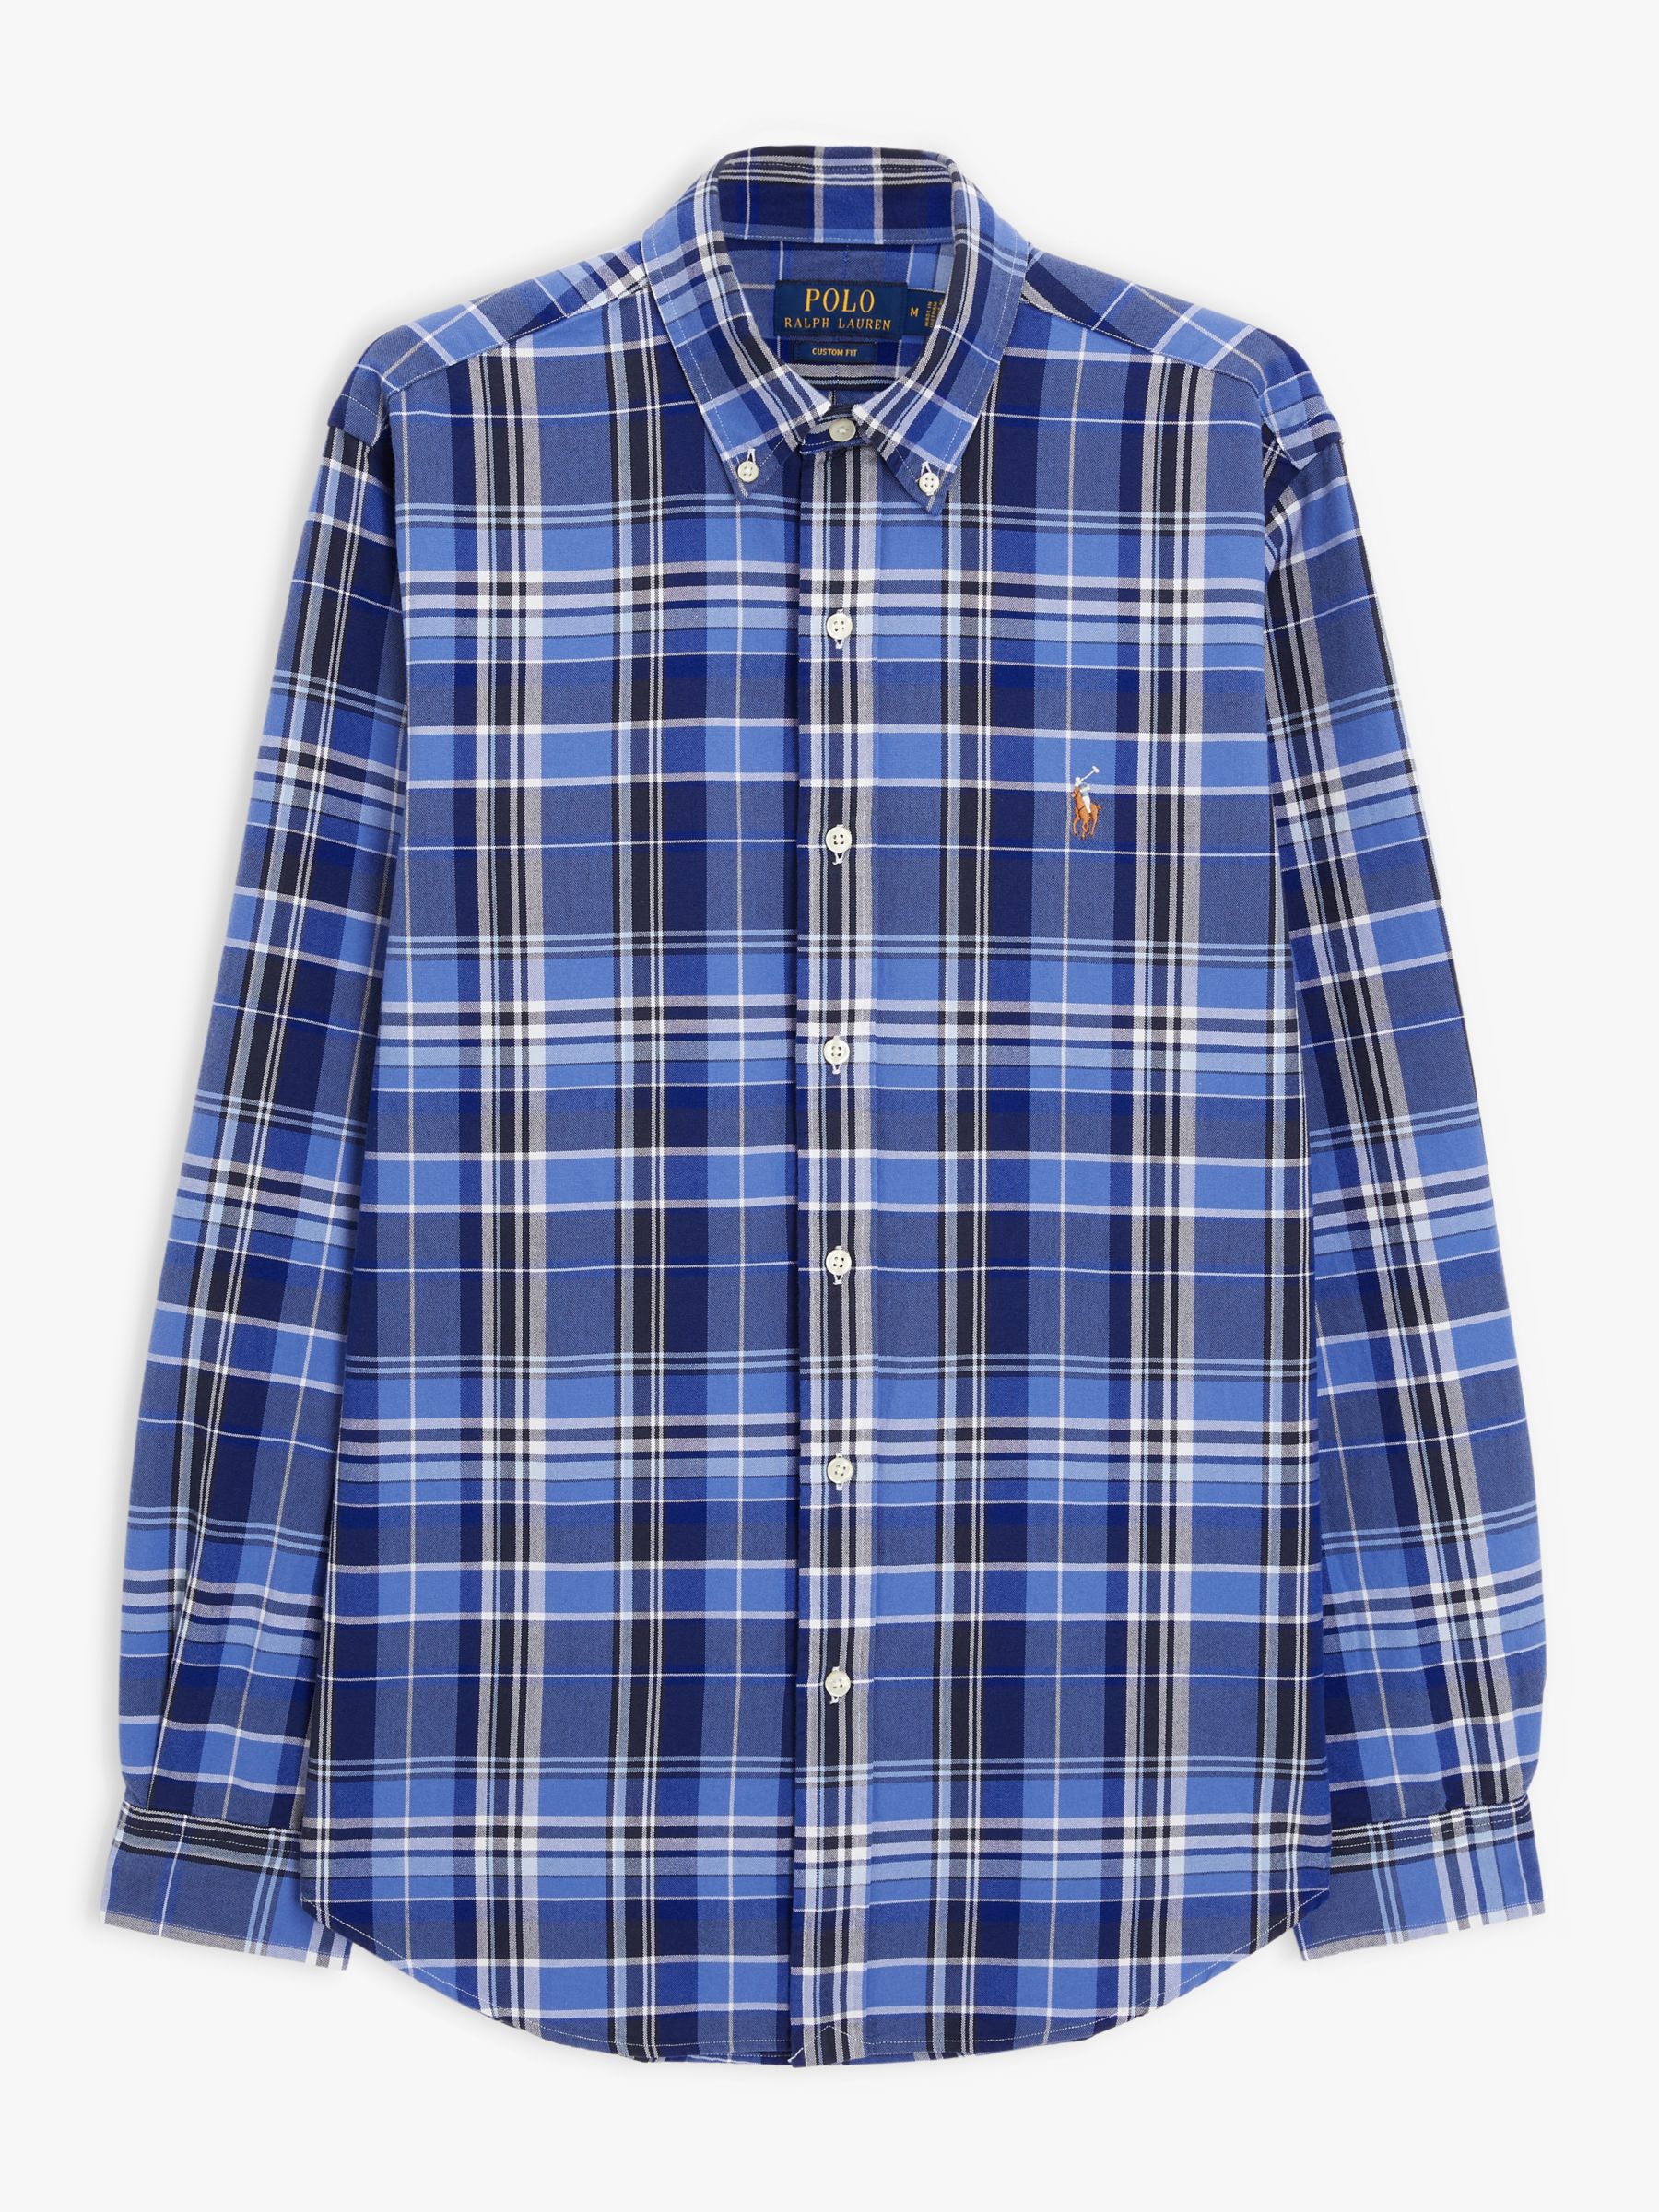 Polo Ralph Lauren Long Sleeve Check Shirt, Blue/Multi, S